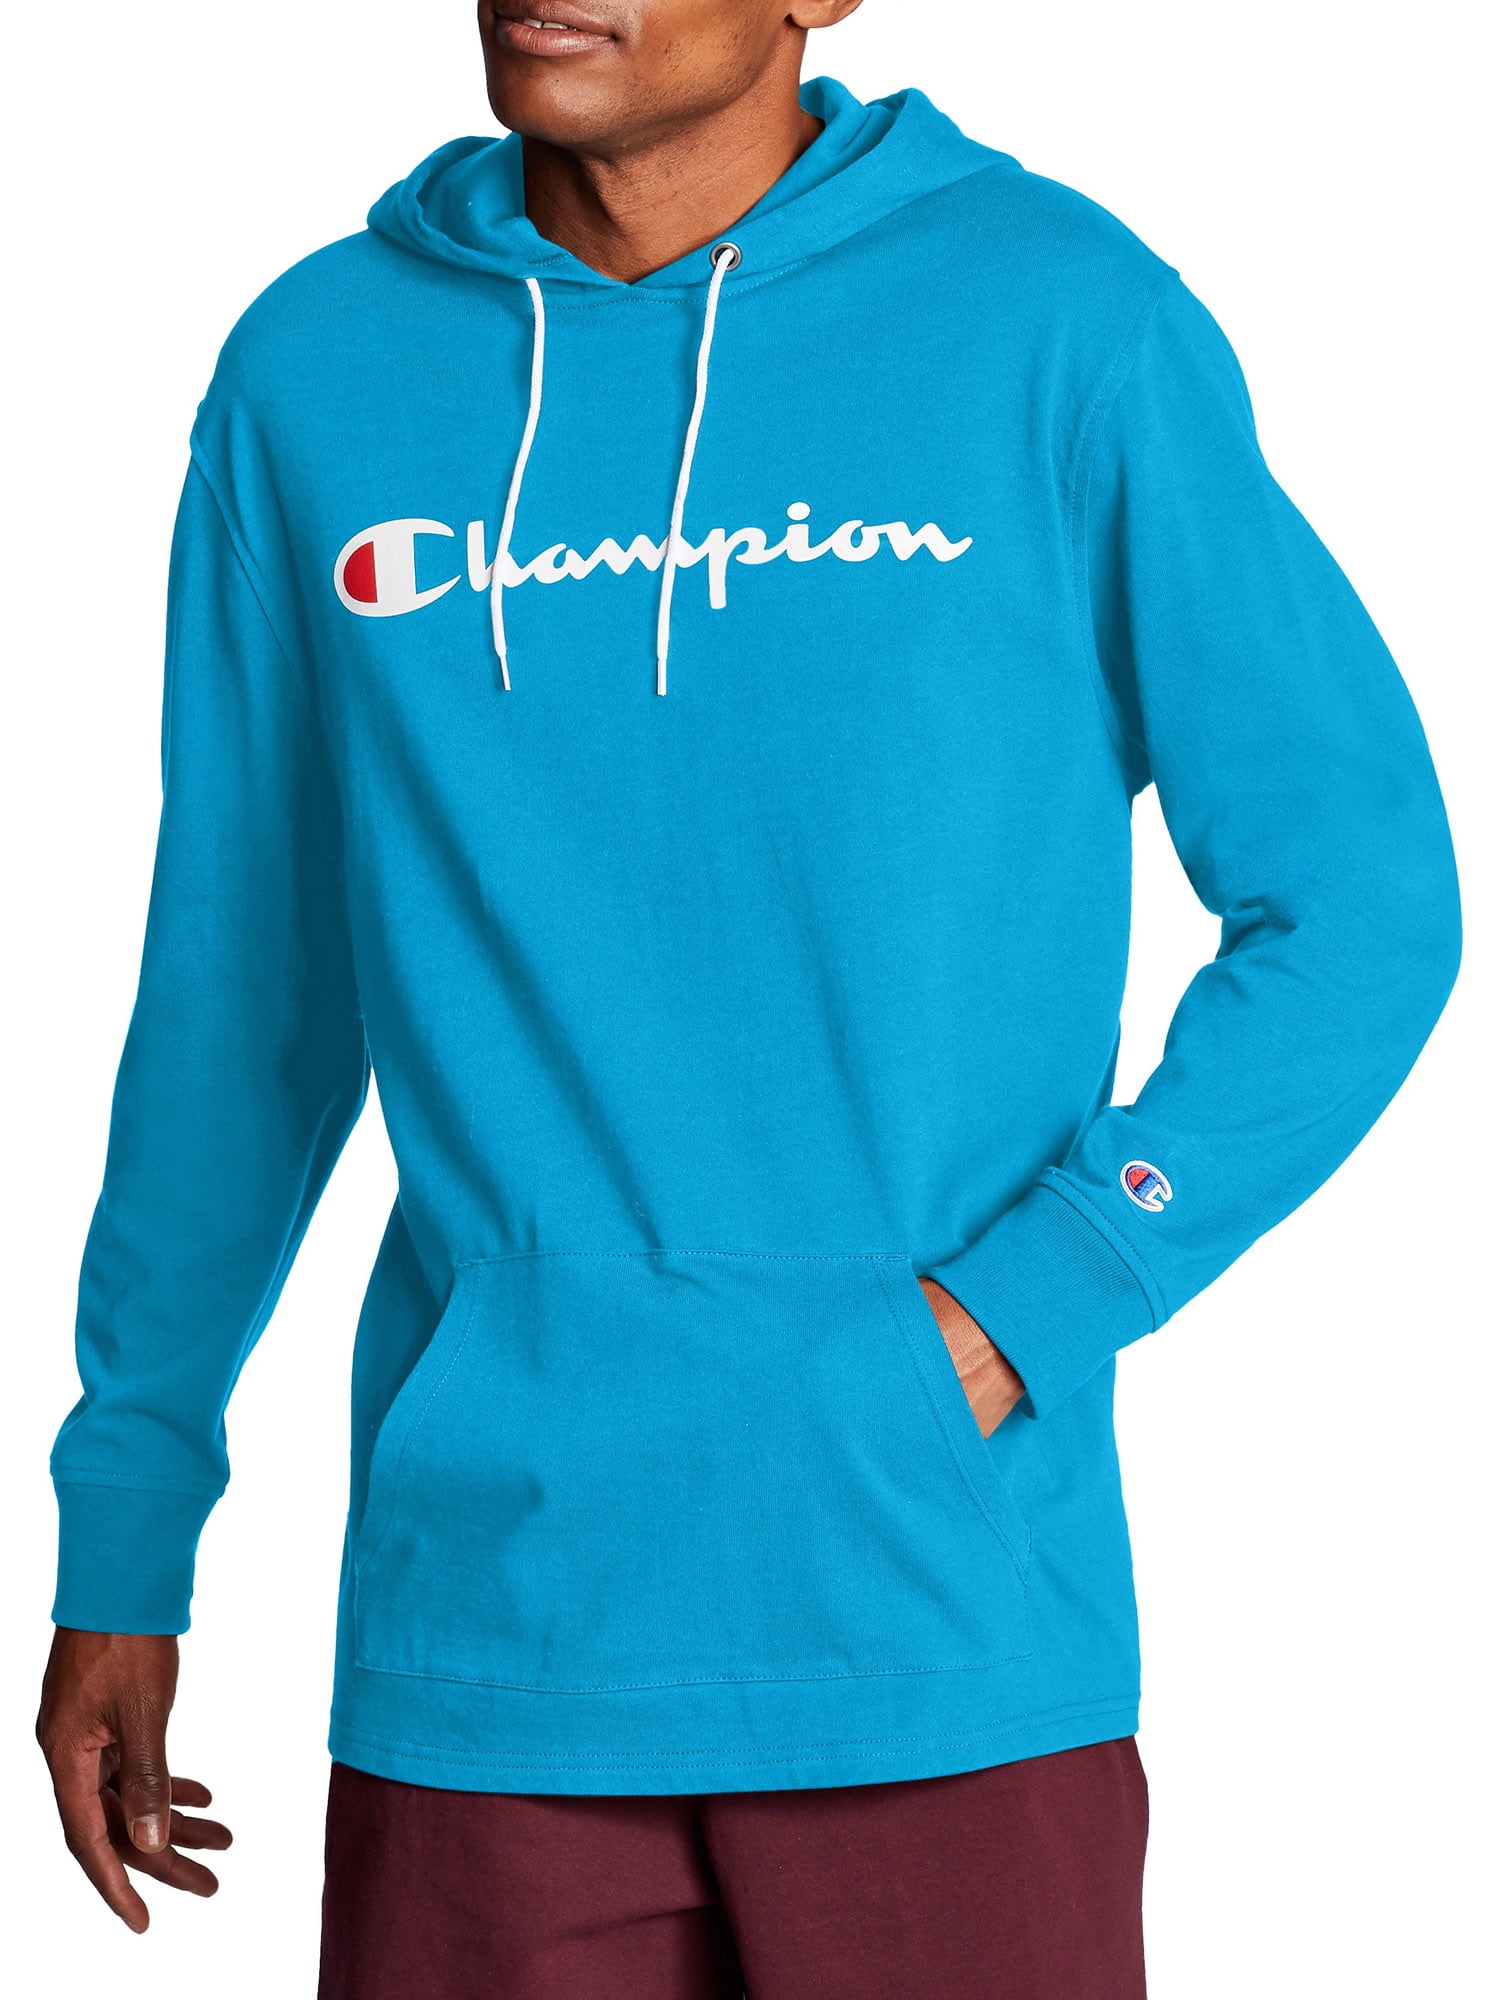 champion bright blue hoodie